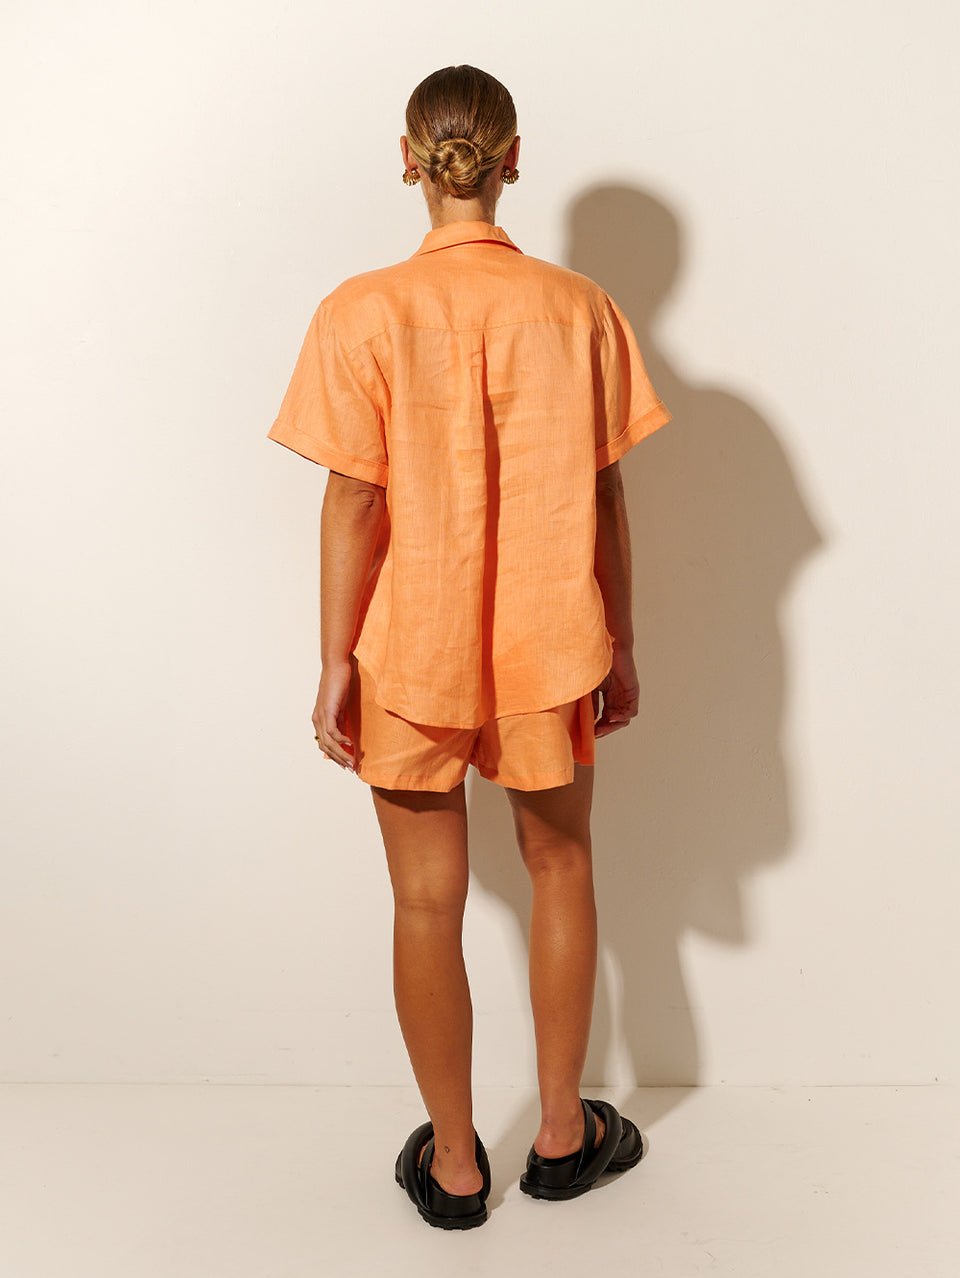 KIVARI Eve Shirt | Model wearing Orange Shirt Back View